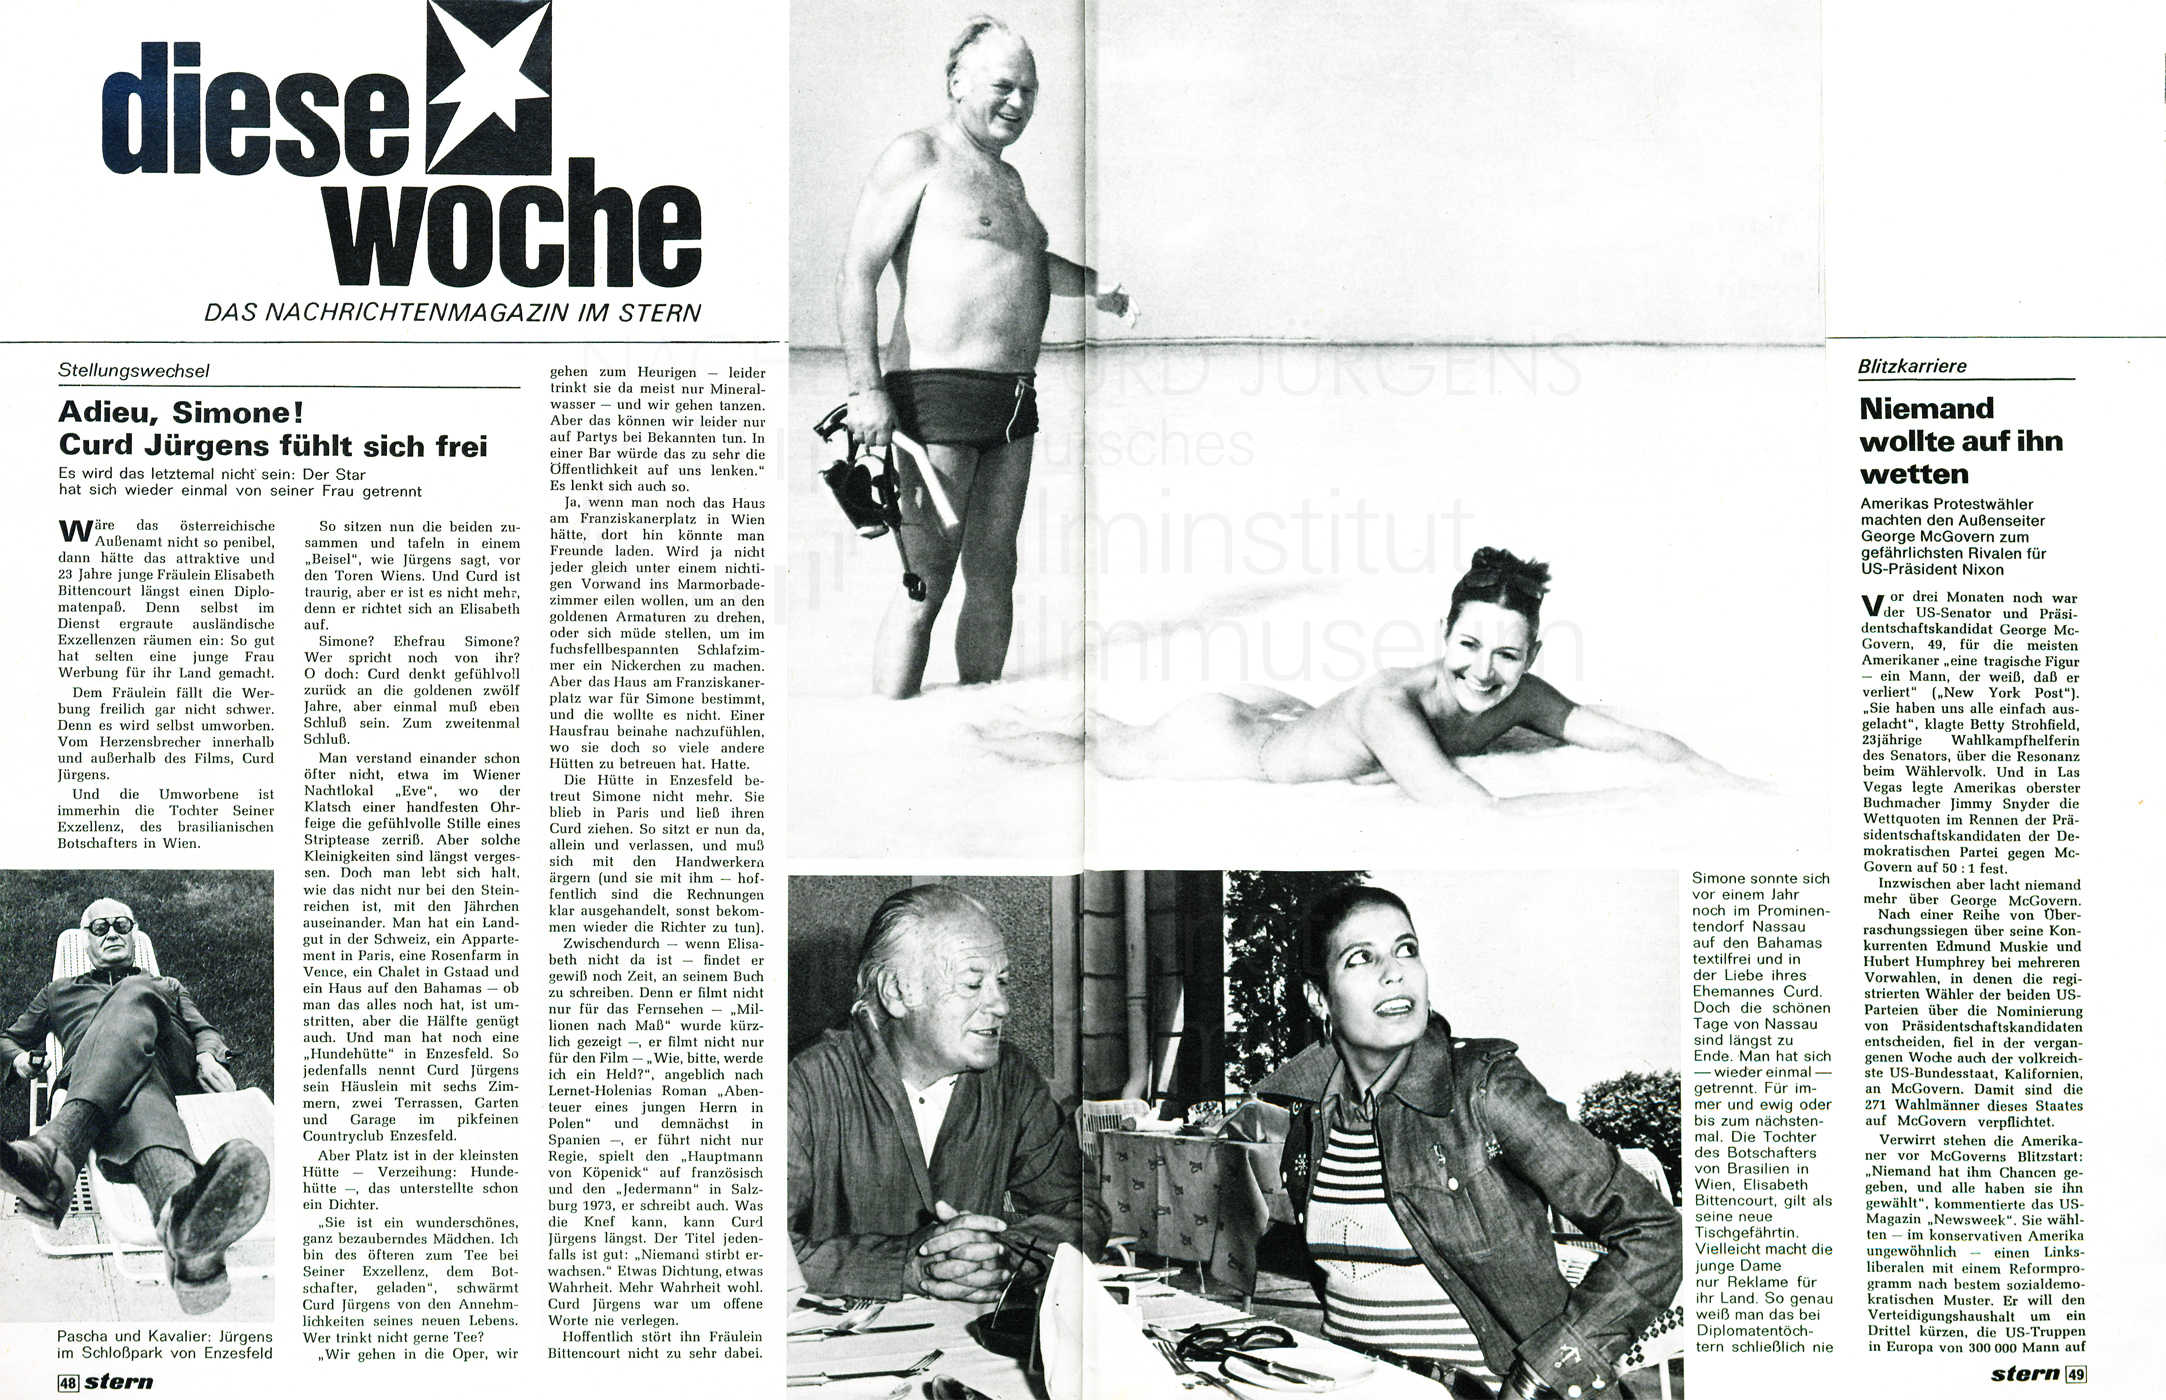 Stern: "Adieu, Simone! Curd Jürges fühlt sich frei", 1972